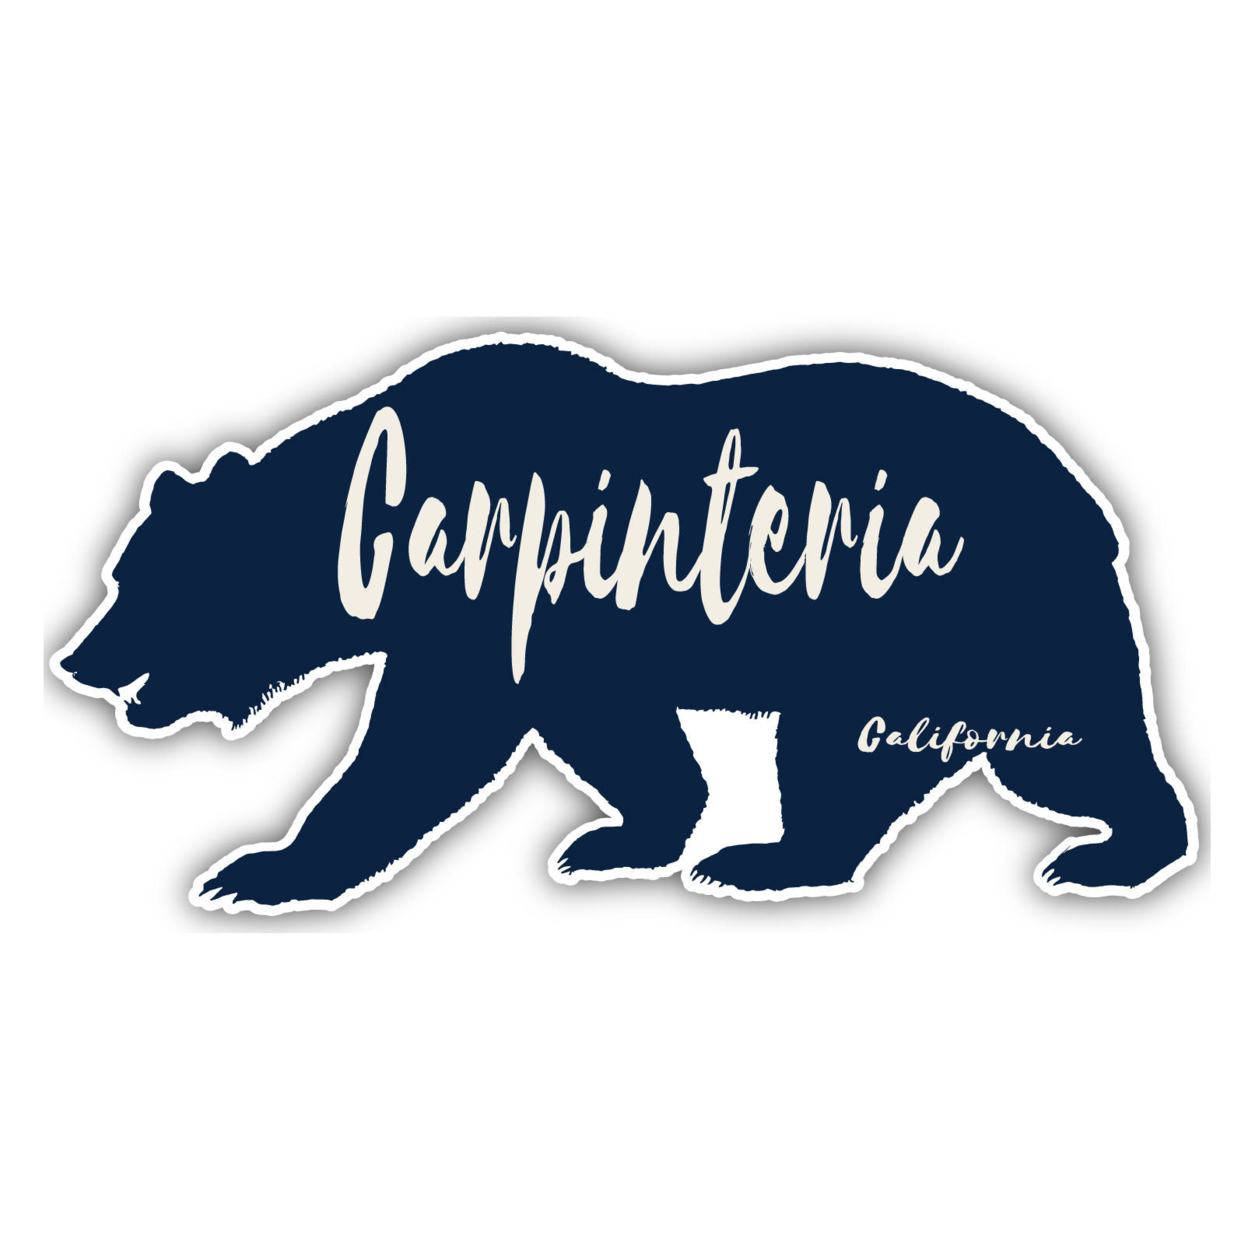 Carpinteria California Souvenir Decorative Stickers (Choose Theme And Size) - Single Unit, 2-Inch, Tent